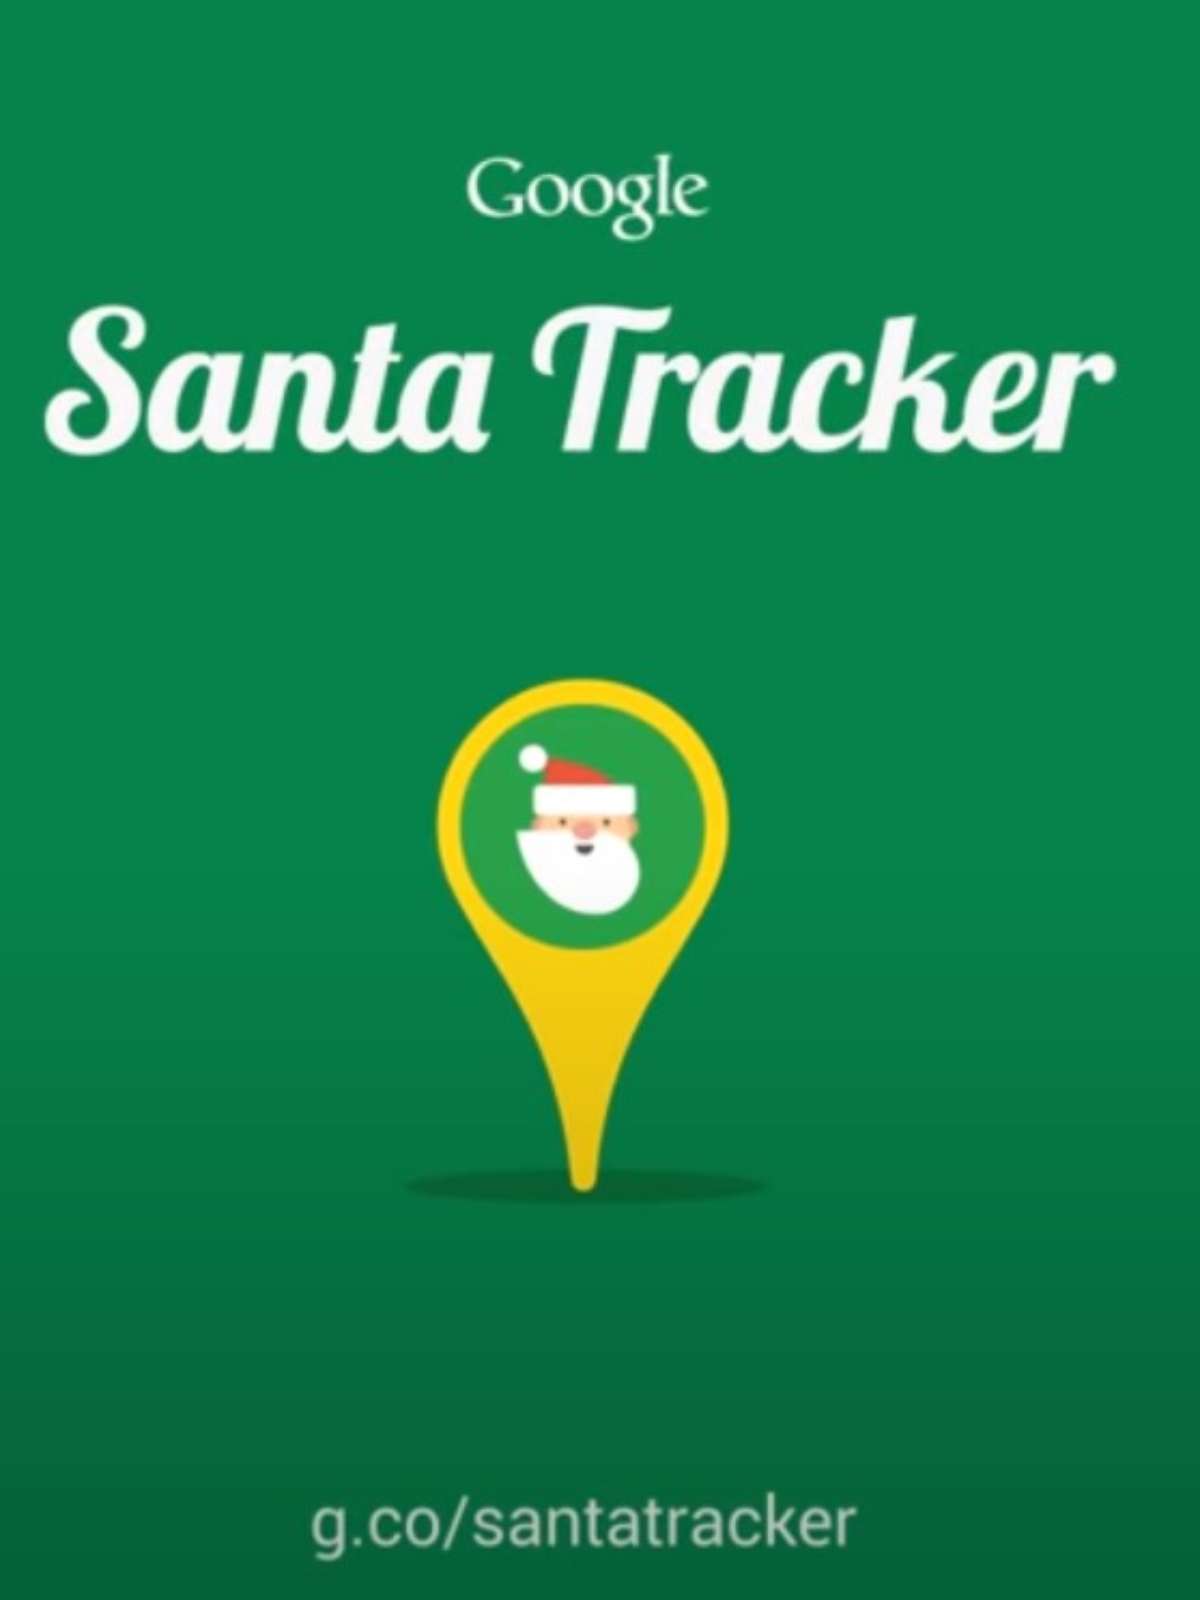 Siga o Papai Noel no Google Earth - Infowester